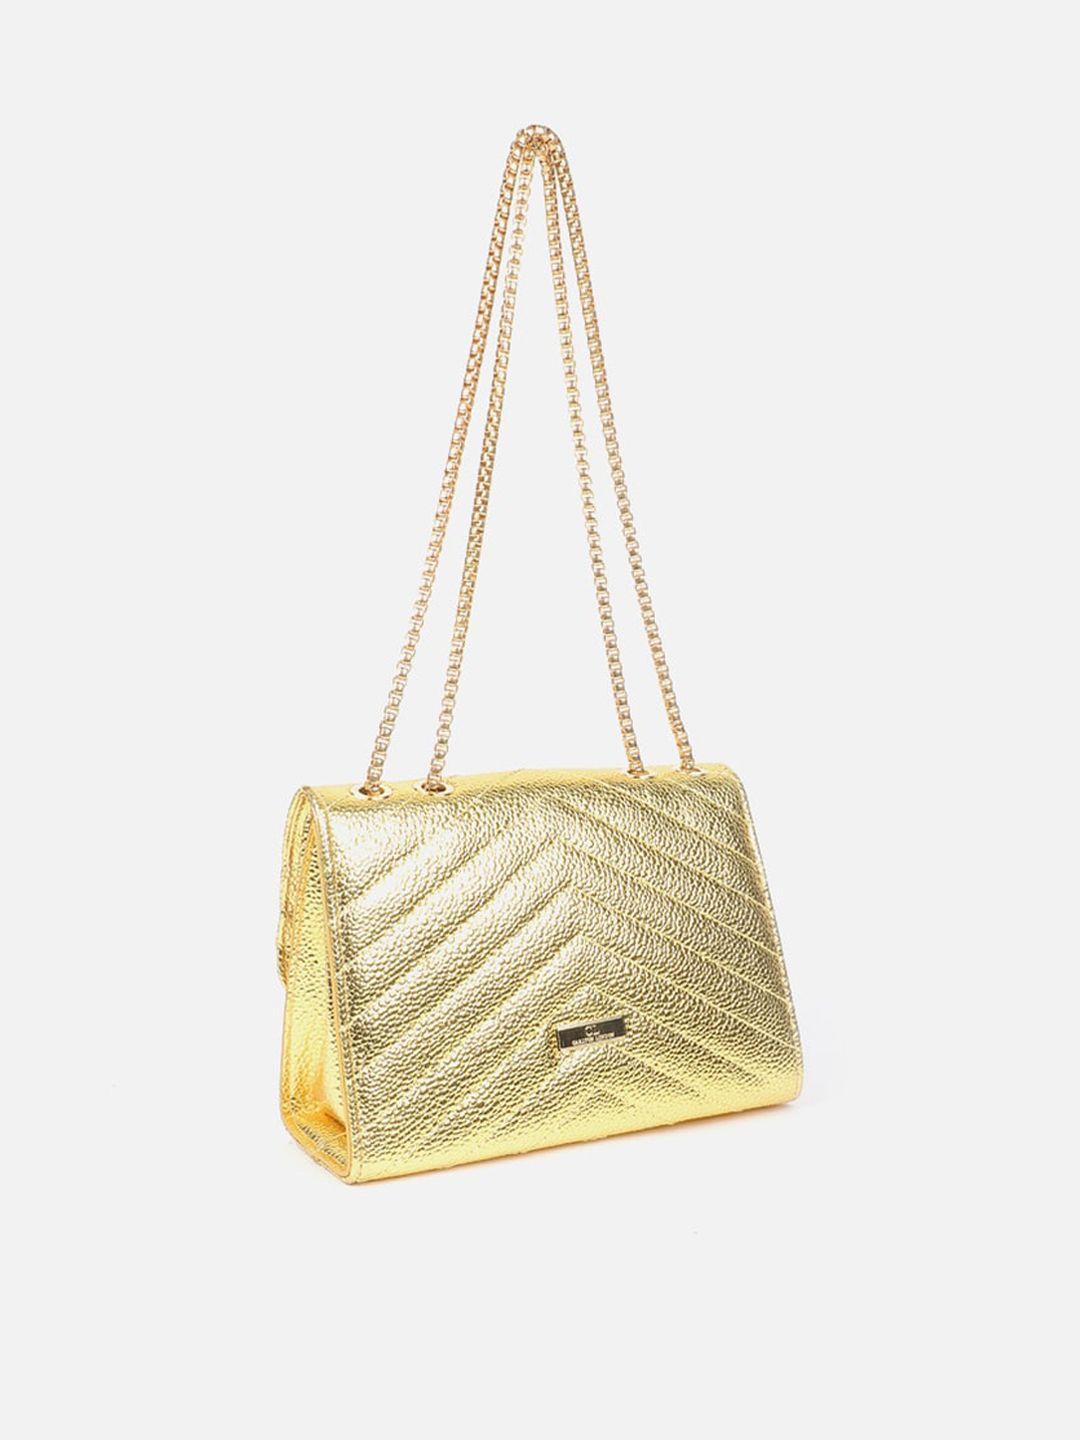 carlton london textured structured sling bag